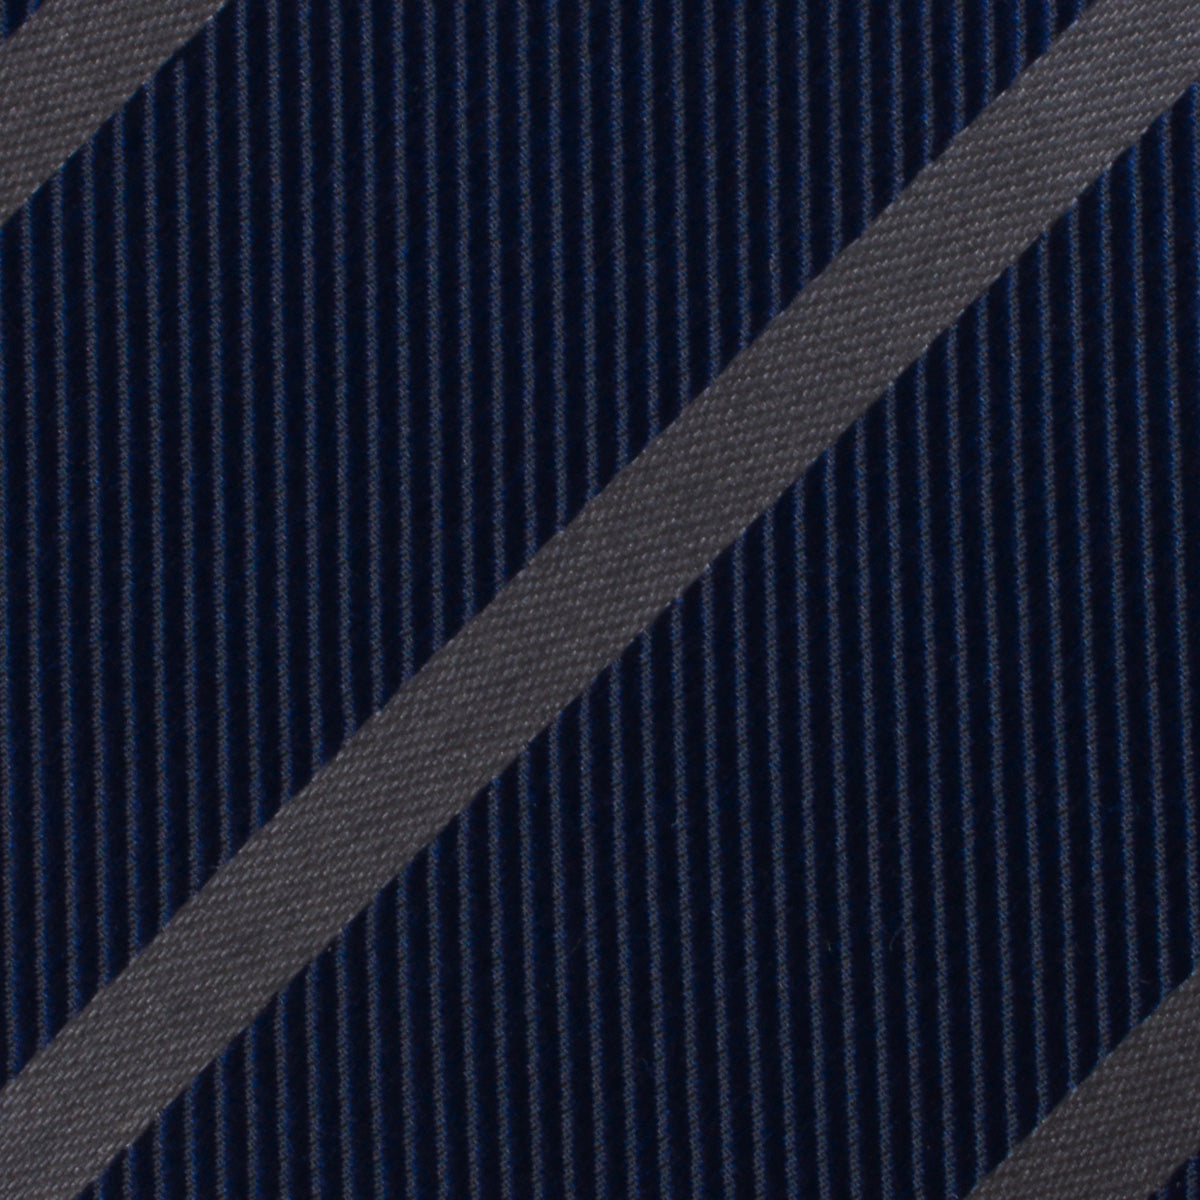 Charcoal Grey Striped Necktie | Classic Navy Blue Repp Tie | Mens Ties ...